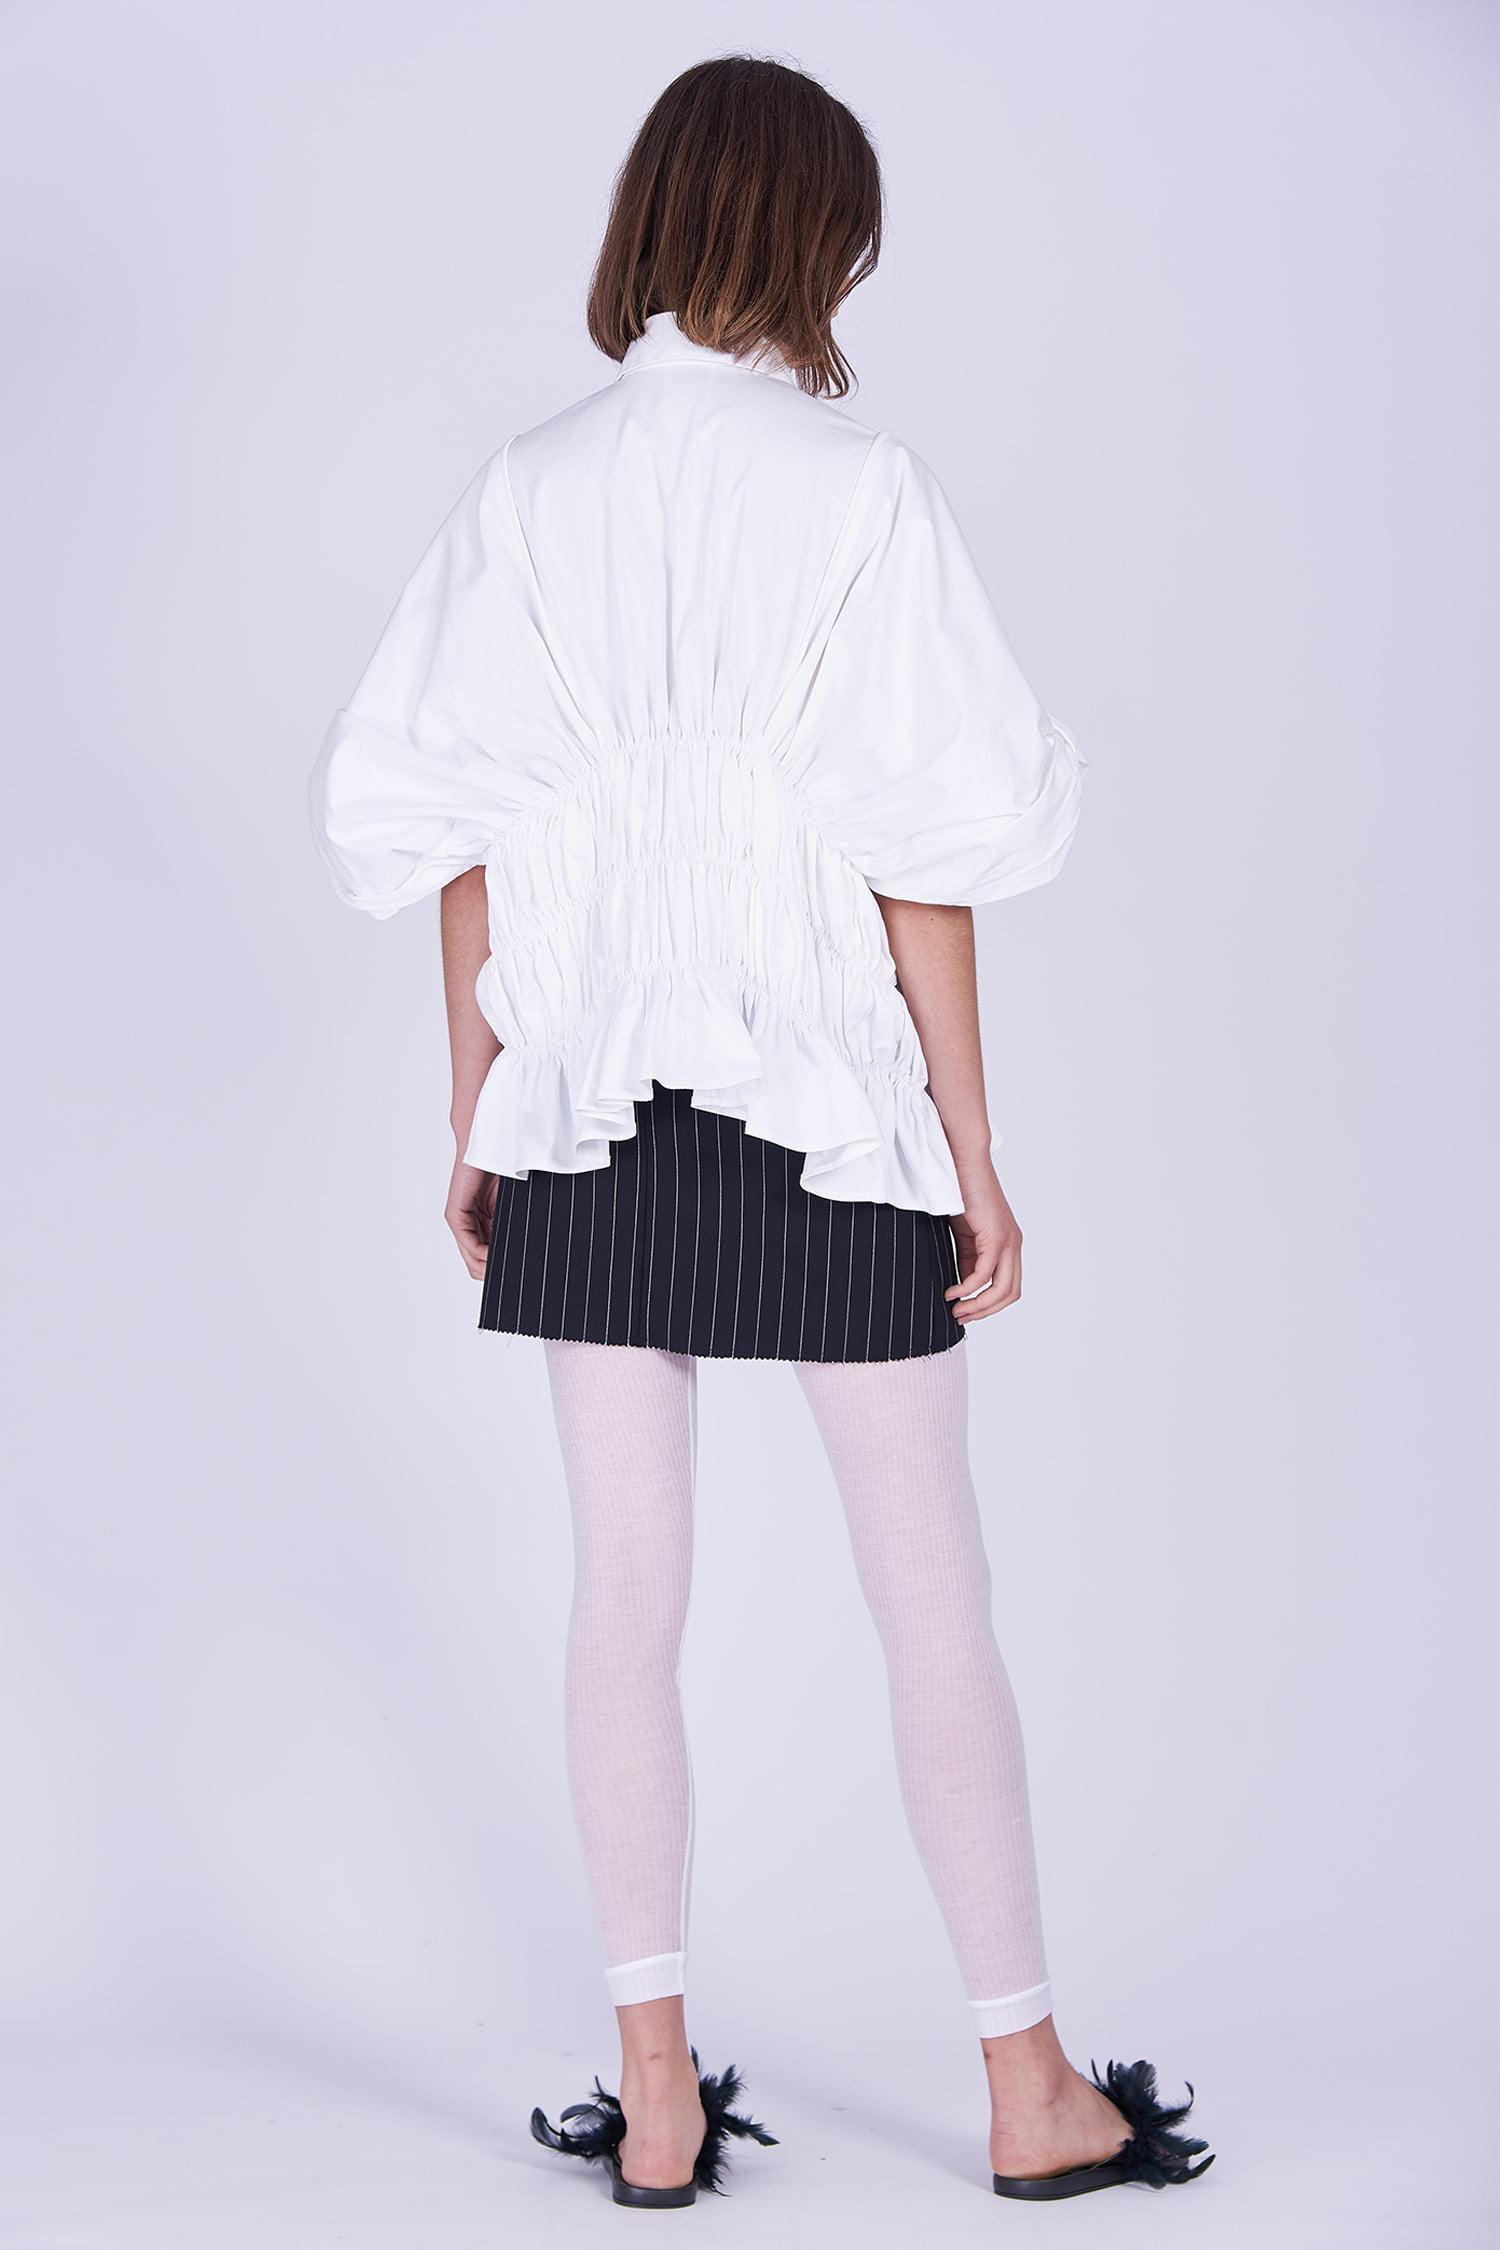 Acephala Ps2020 Black Striped Skirt White Oversize Exuberant Gathered Shirt Czarna Spodnica Biala Koszula Marszczona Back